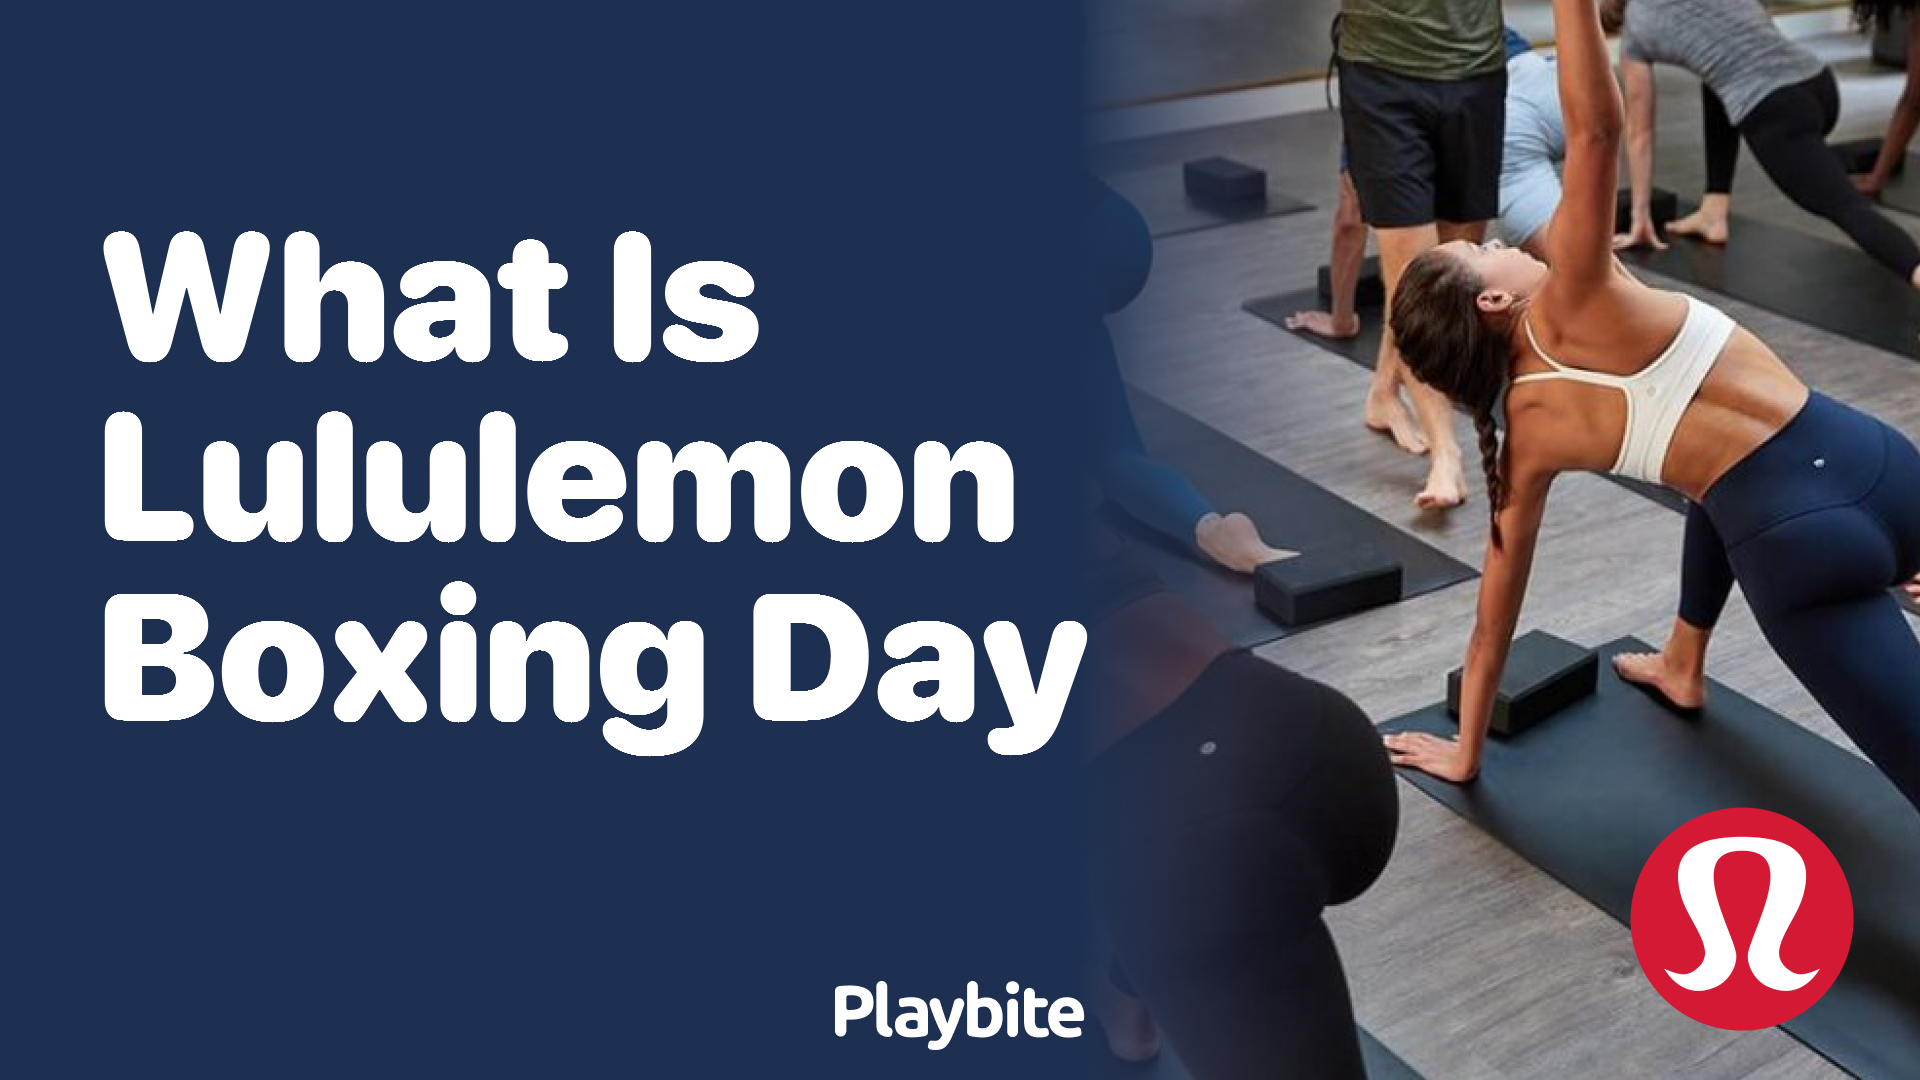 Is Lululemon Athletica Worth the Hype? - Playbite